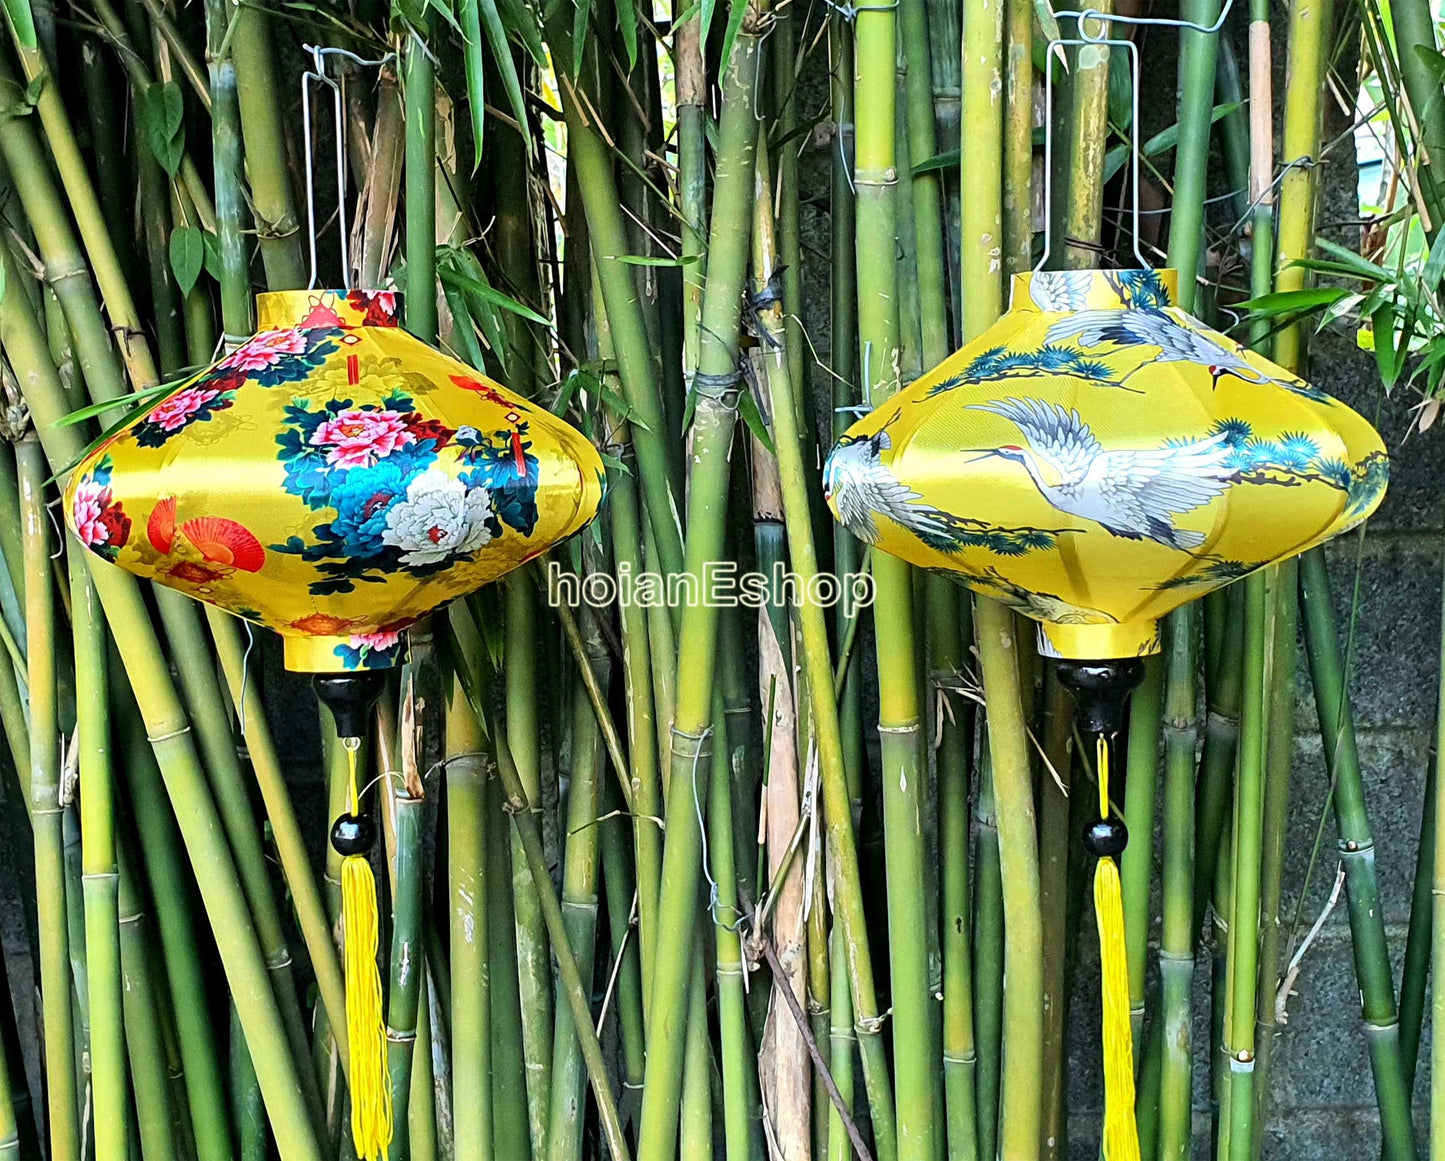 Set 2 Vietnam lanterns 35cm - New 3D flower fabric - Wedding lanterns - Restaurant lanterns - Buyer choose shape and color